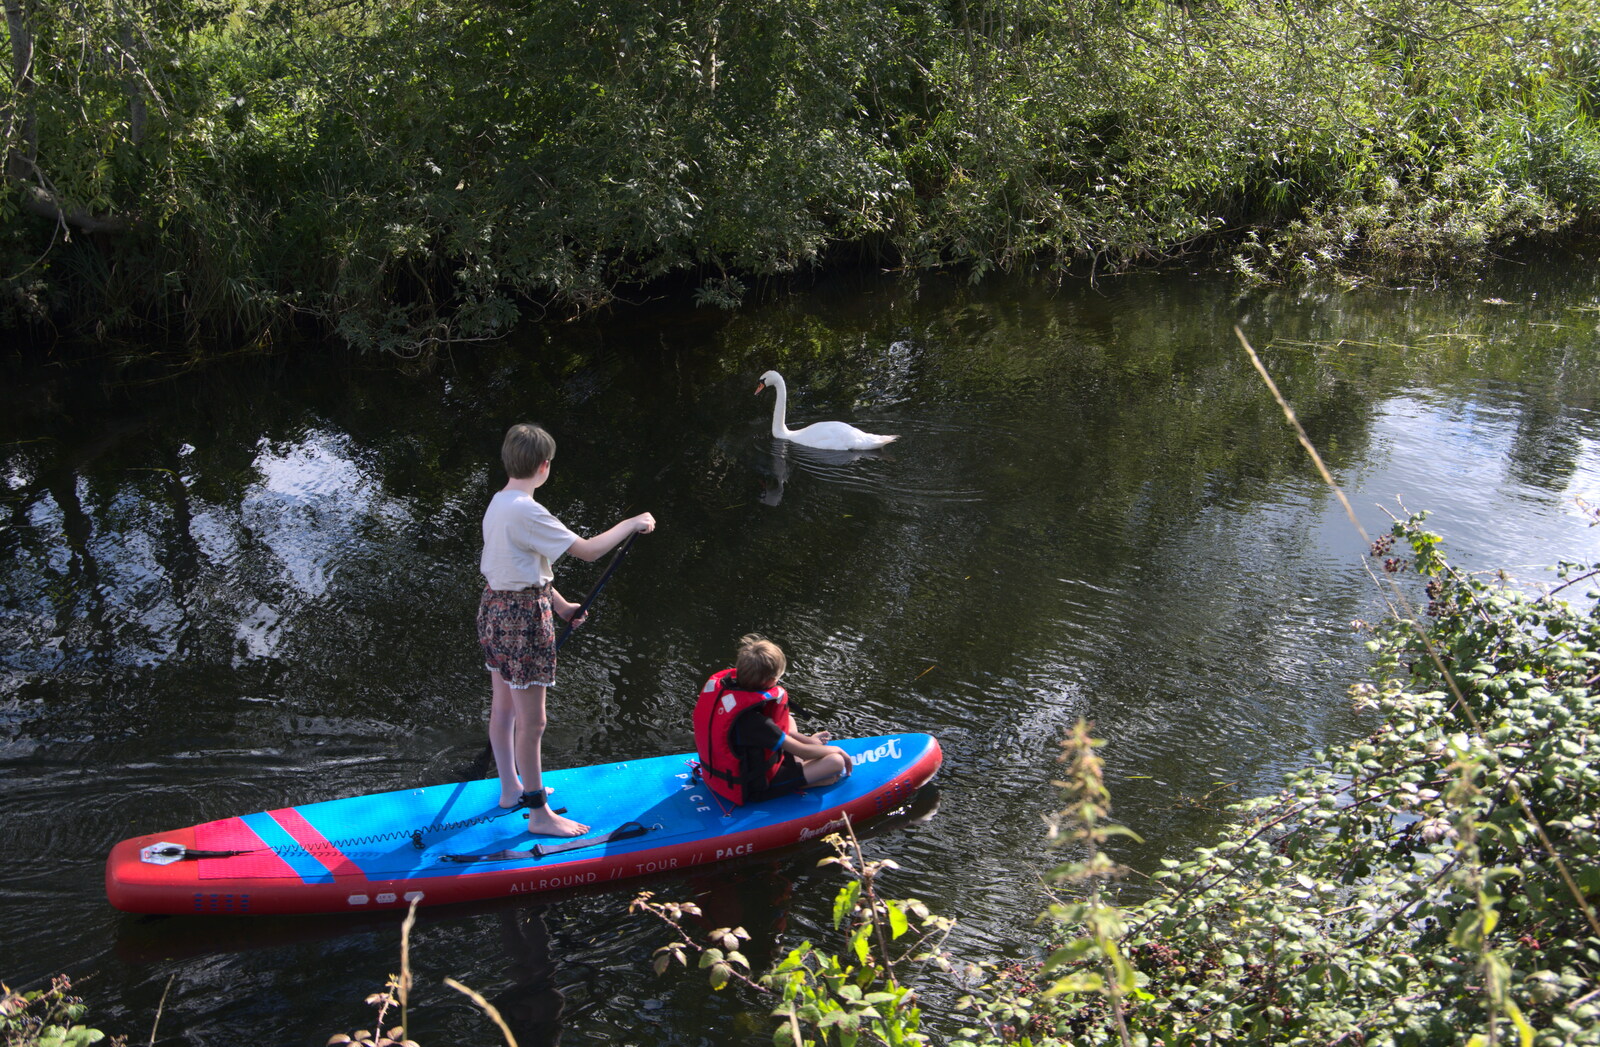 Camping at Three Rivers, Geldeston, Norfolk - 5th September 2020: Lydia gingerly navigates past a swan